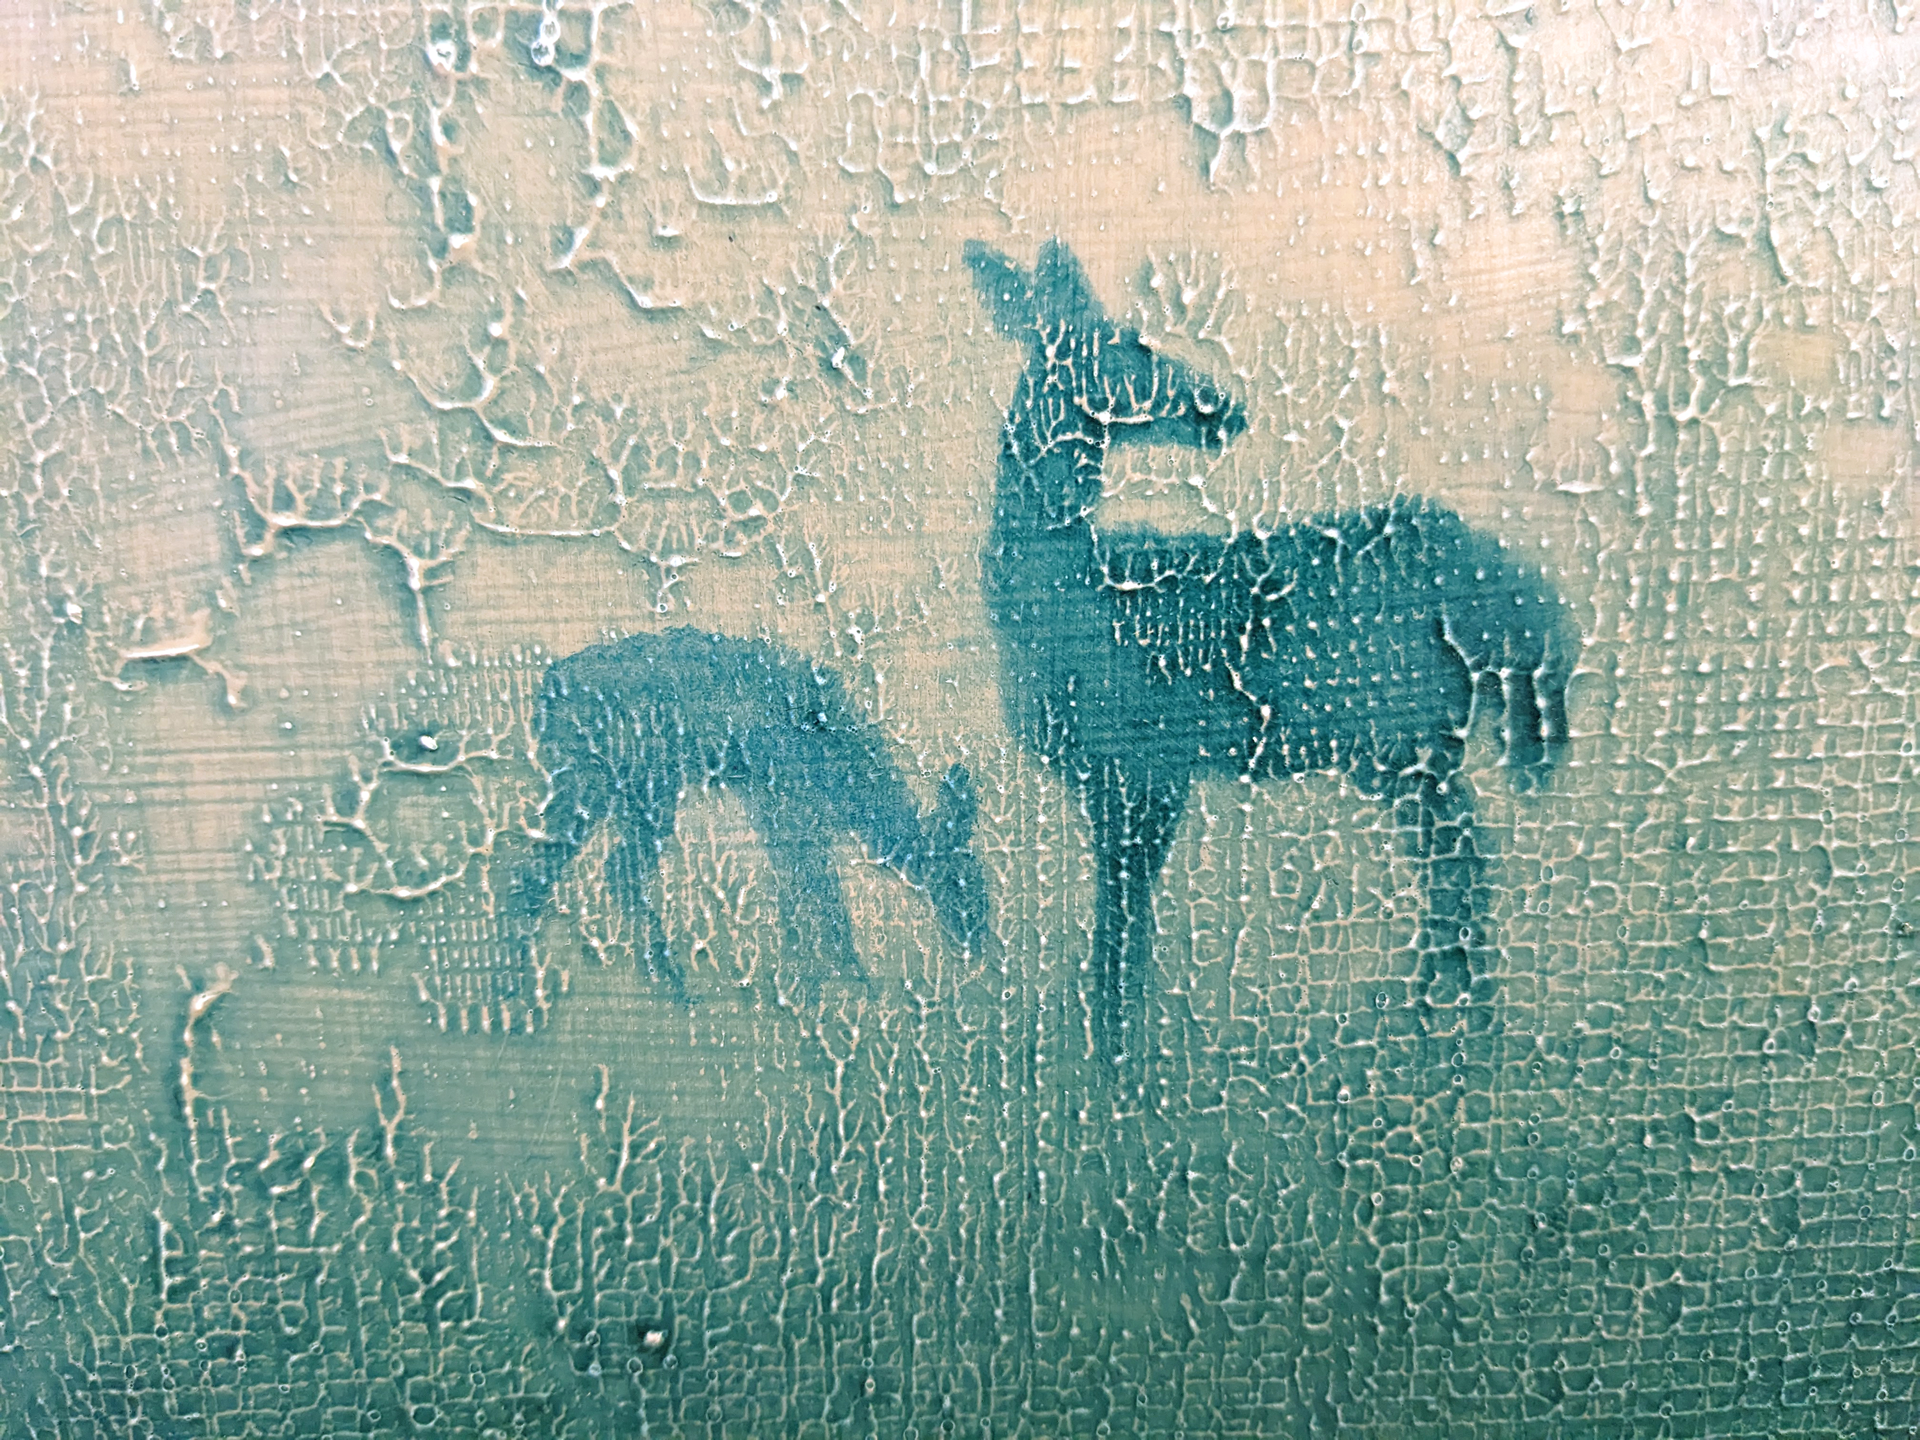 Two Deer by Susan Hall